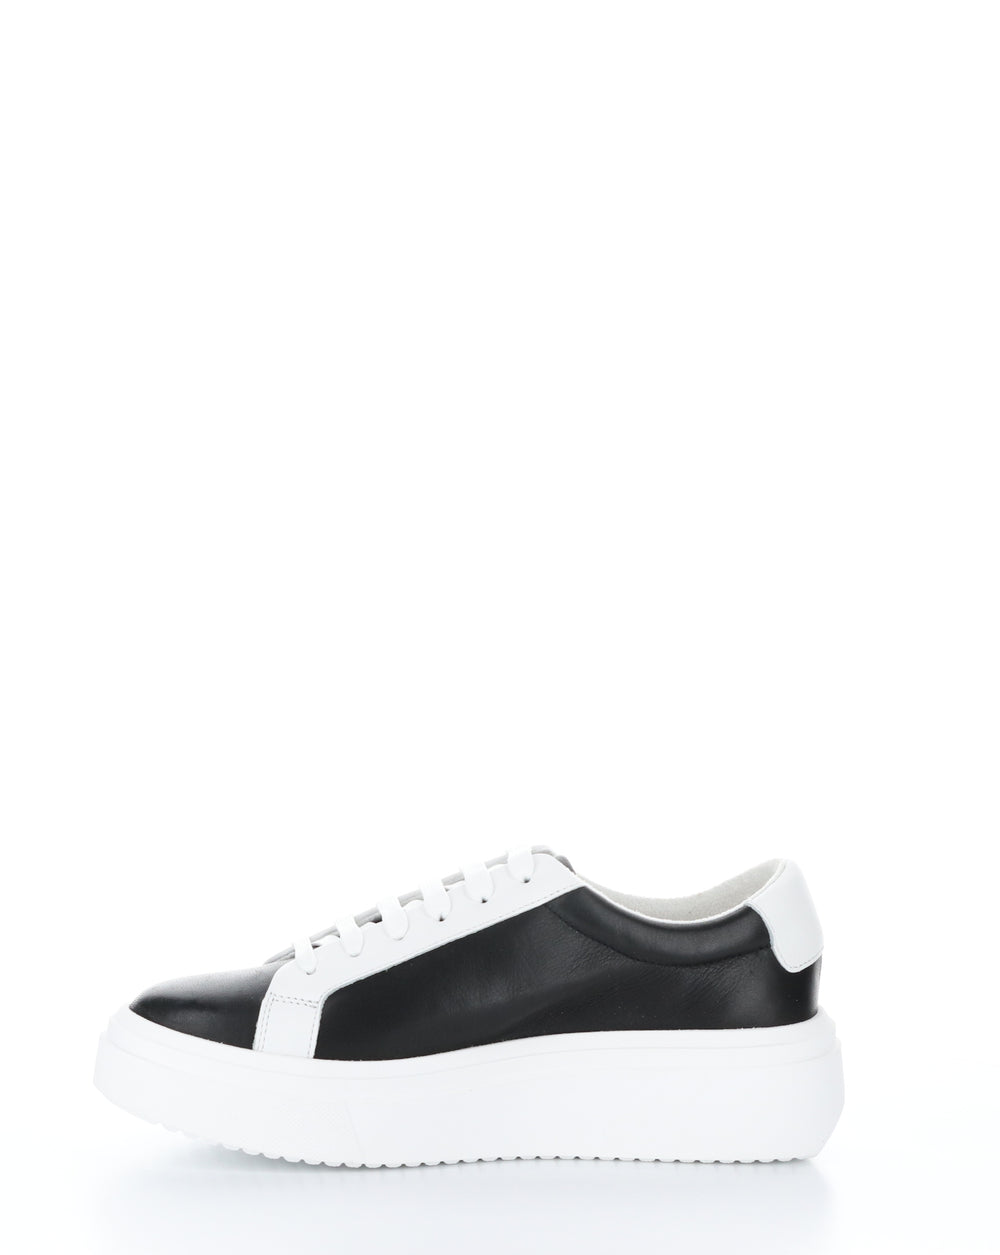 FUZI BLACK/WHITE Lace-up Shoes